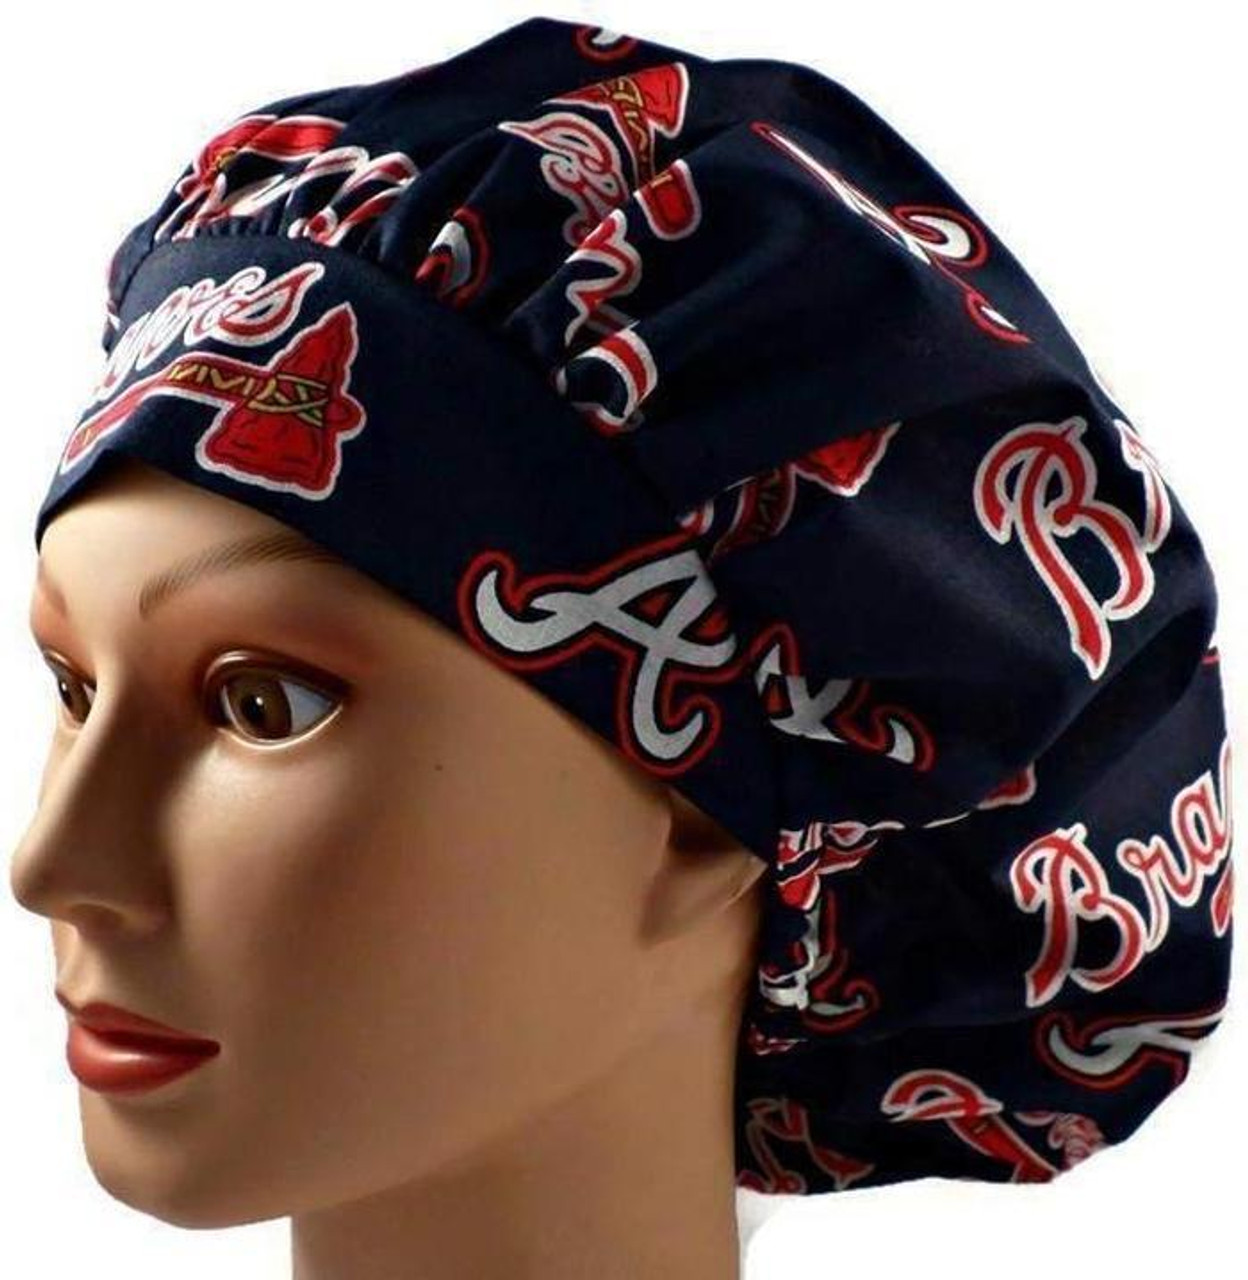 Women's Atlanta Braves Bouffant Surgical Scrub Hat, Adjustable with elastic  and cord lock, Handmade - Crazy Caps Scrub Hats